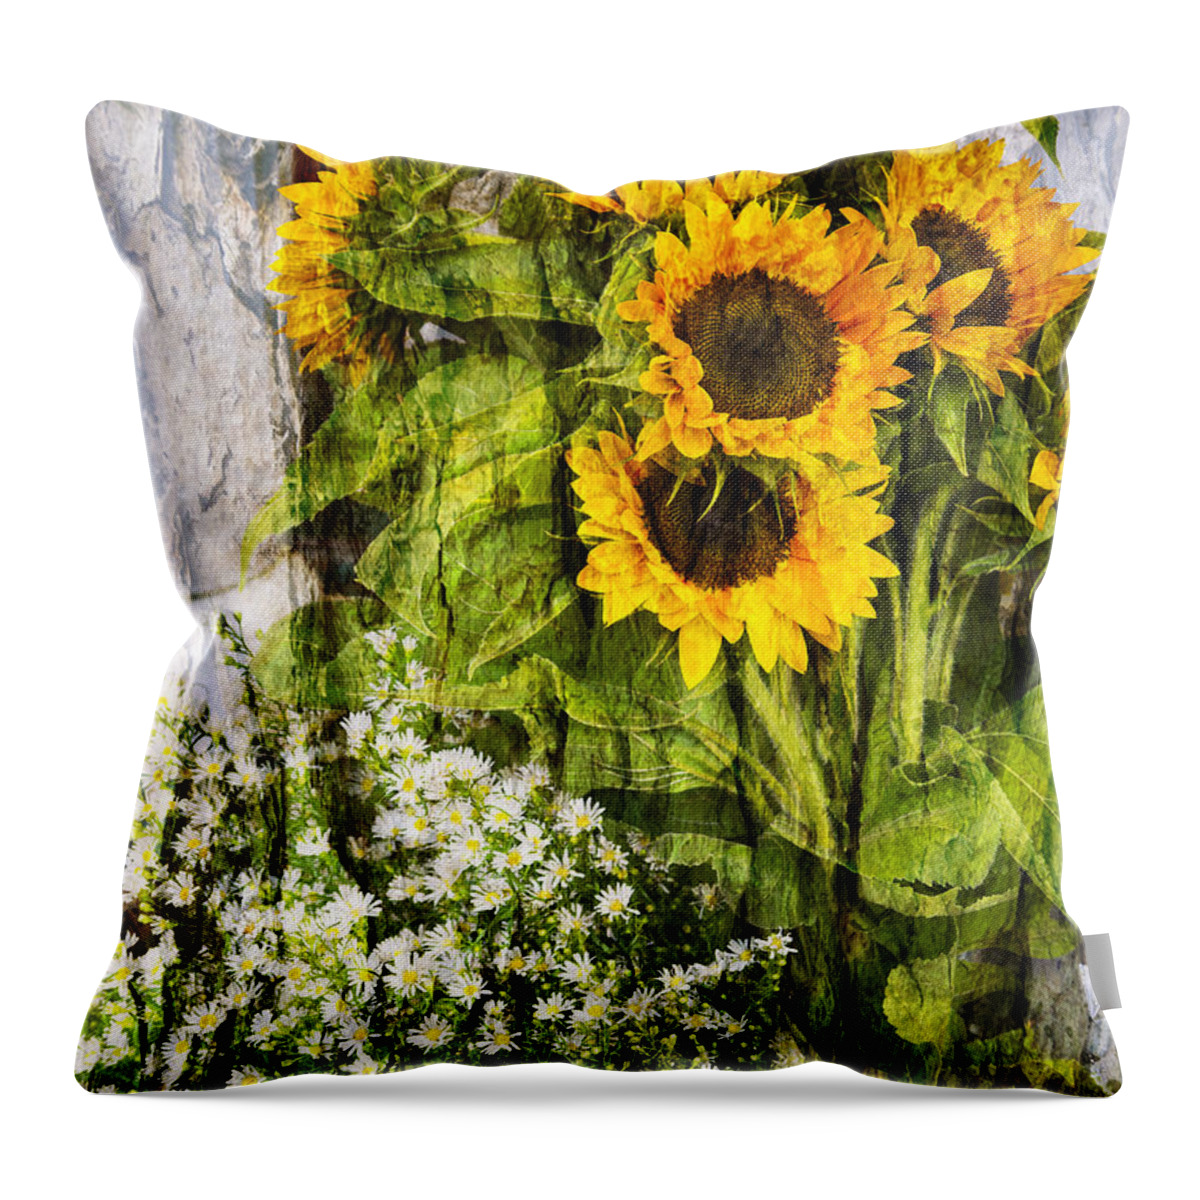 Krakow Throw Pillow featuring the photograph Textured Sunflowers by Brenda Kean